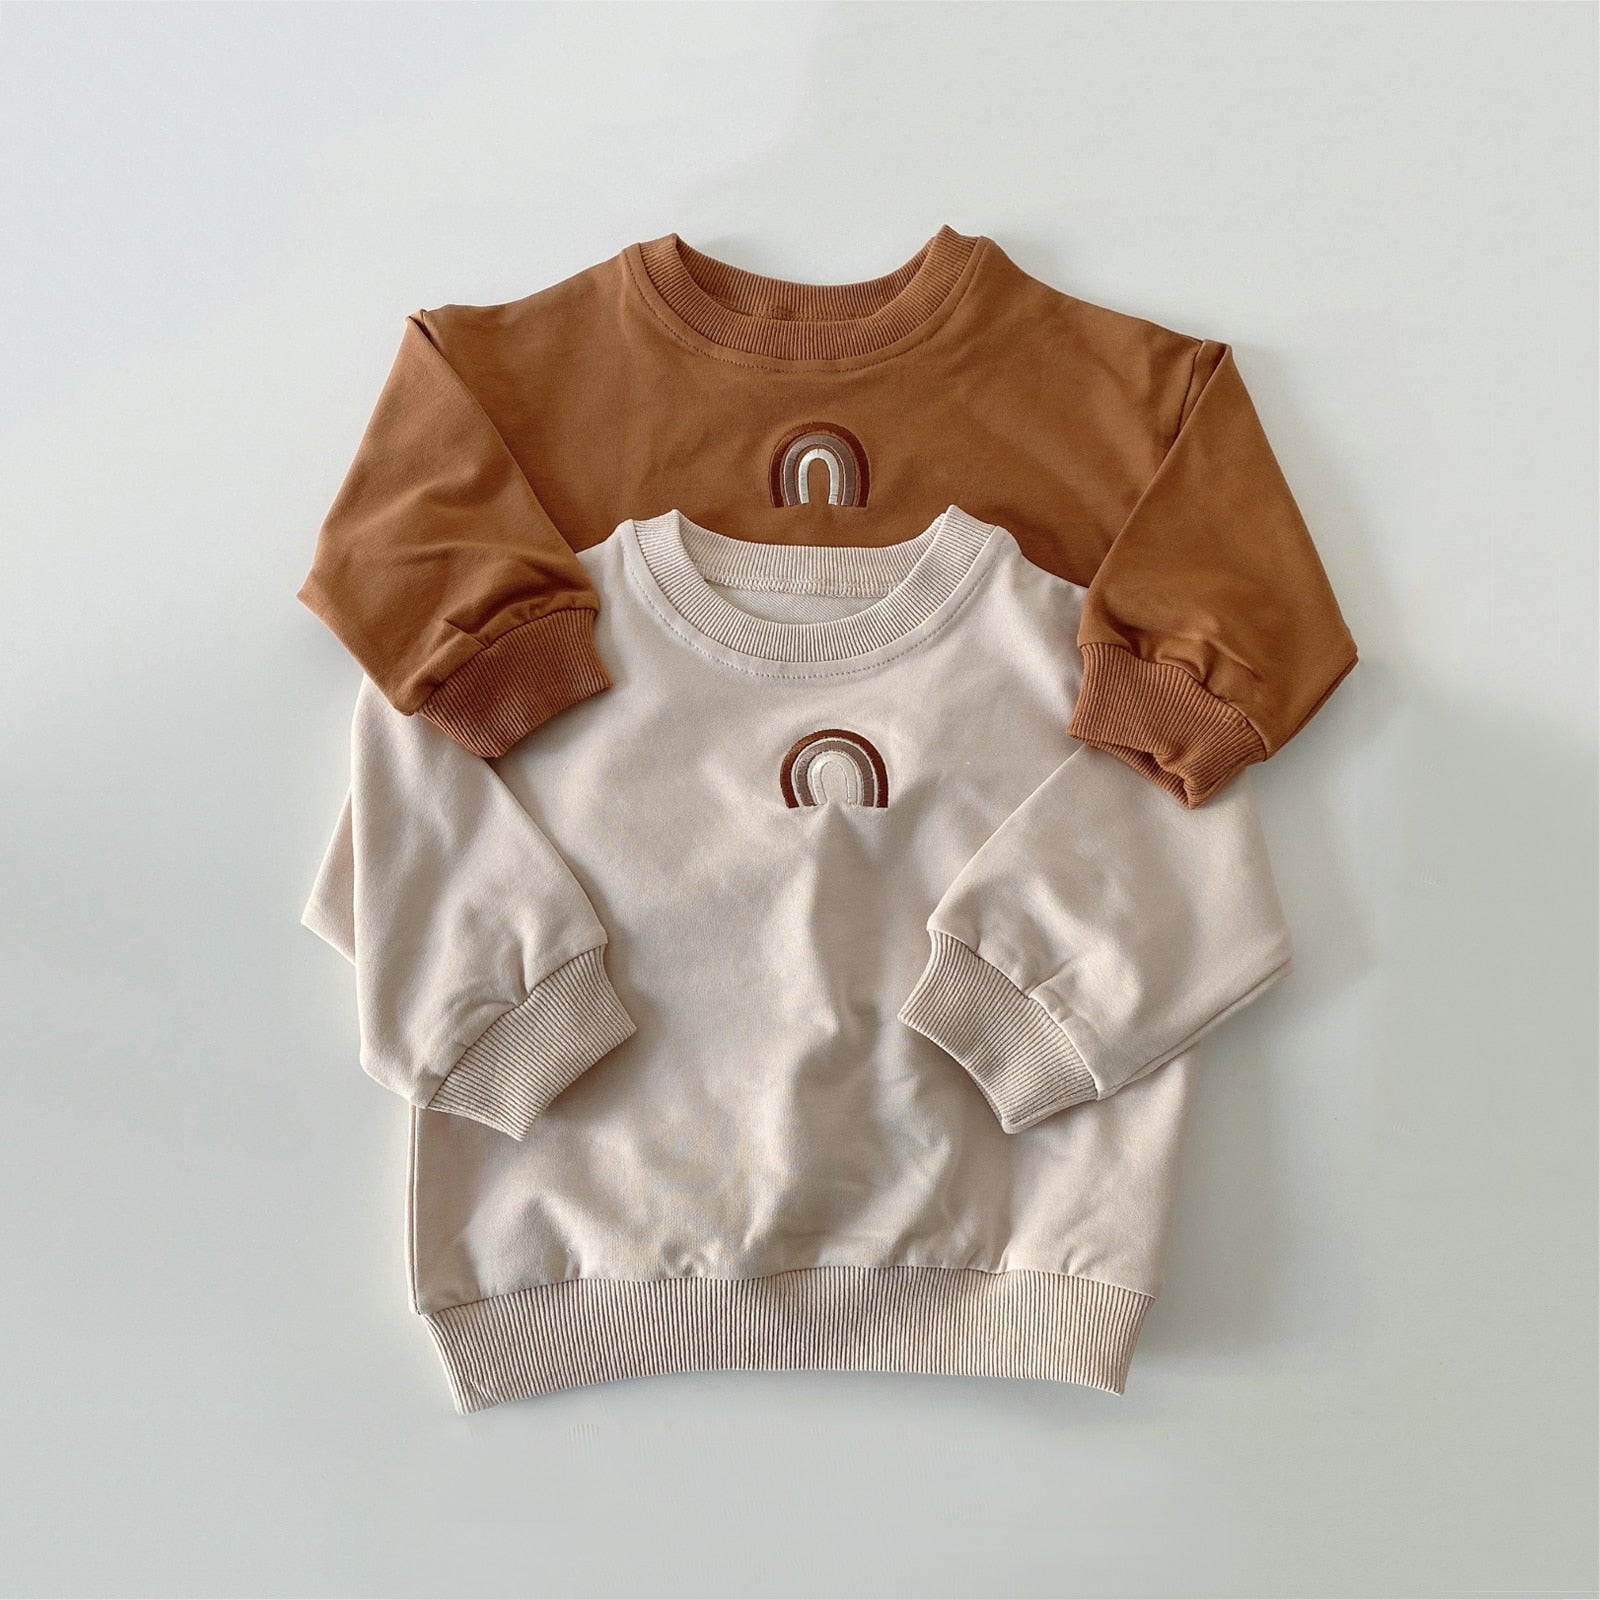 Rainbow Pullover, Newborn & Toddler Clothing, Wyld Bub